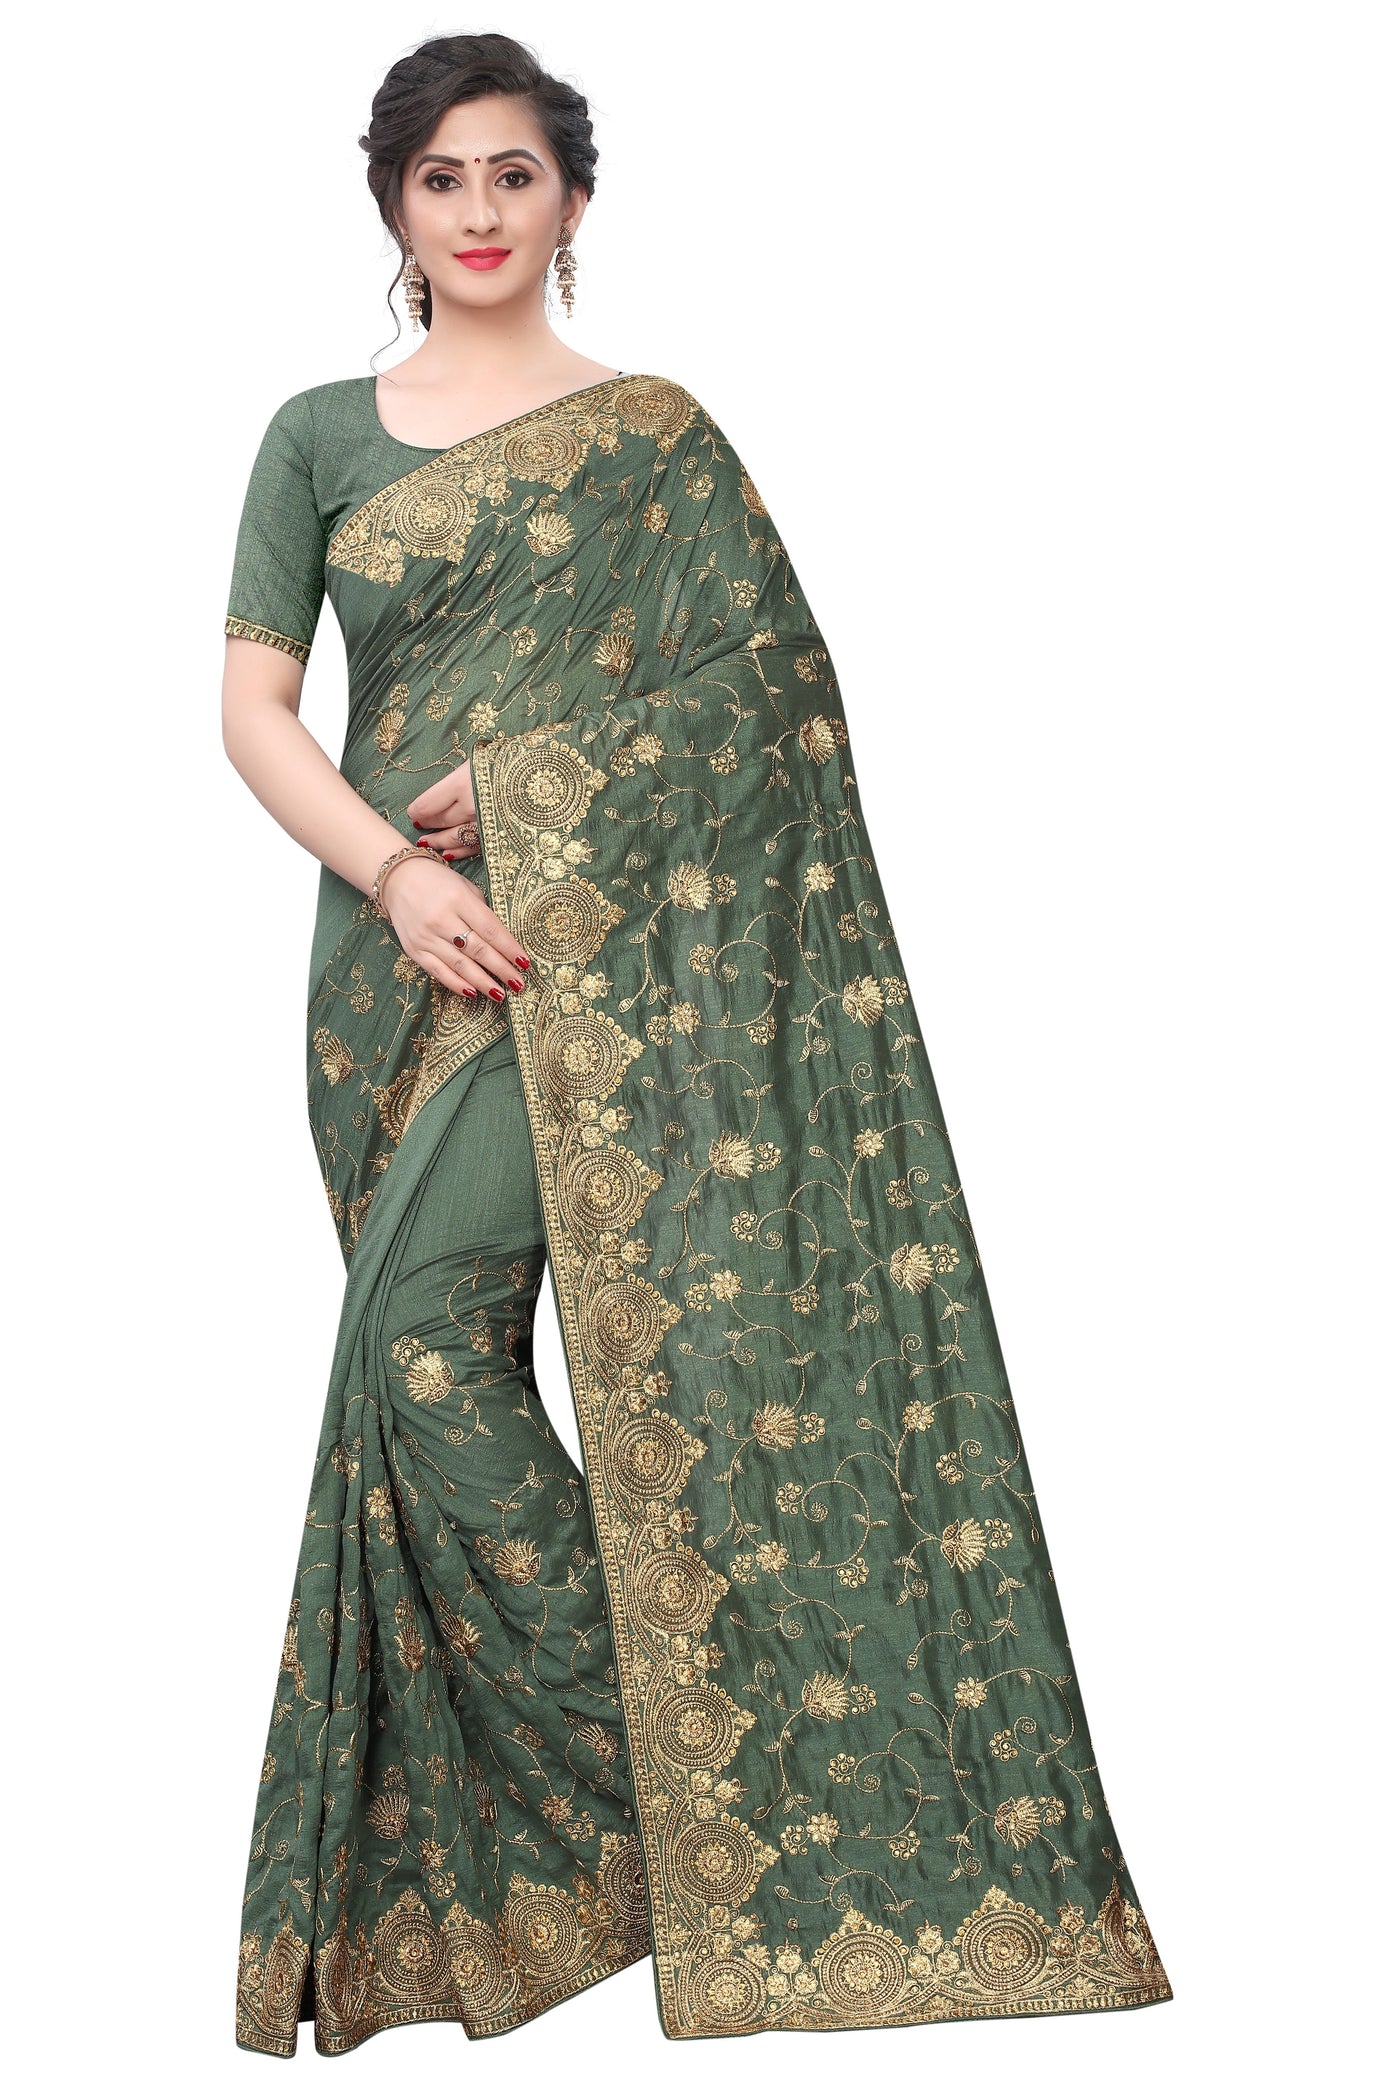 Two Tone Vichitra Silk Green Saree With Blouse